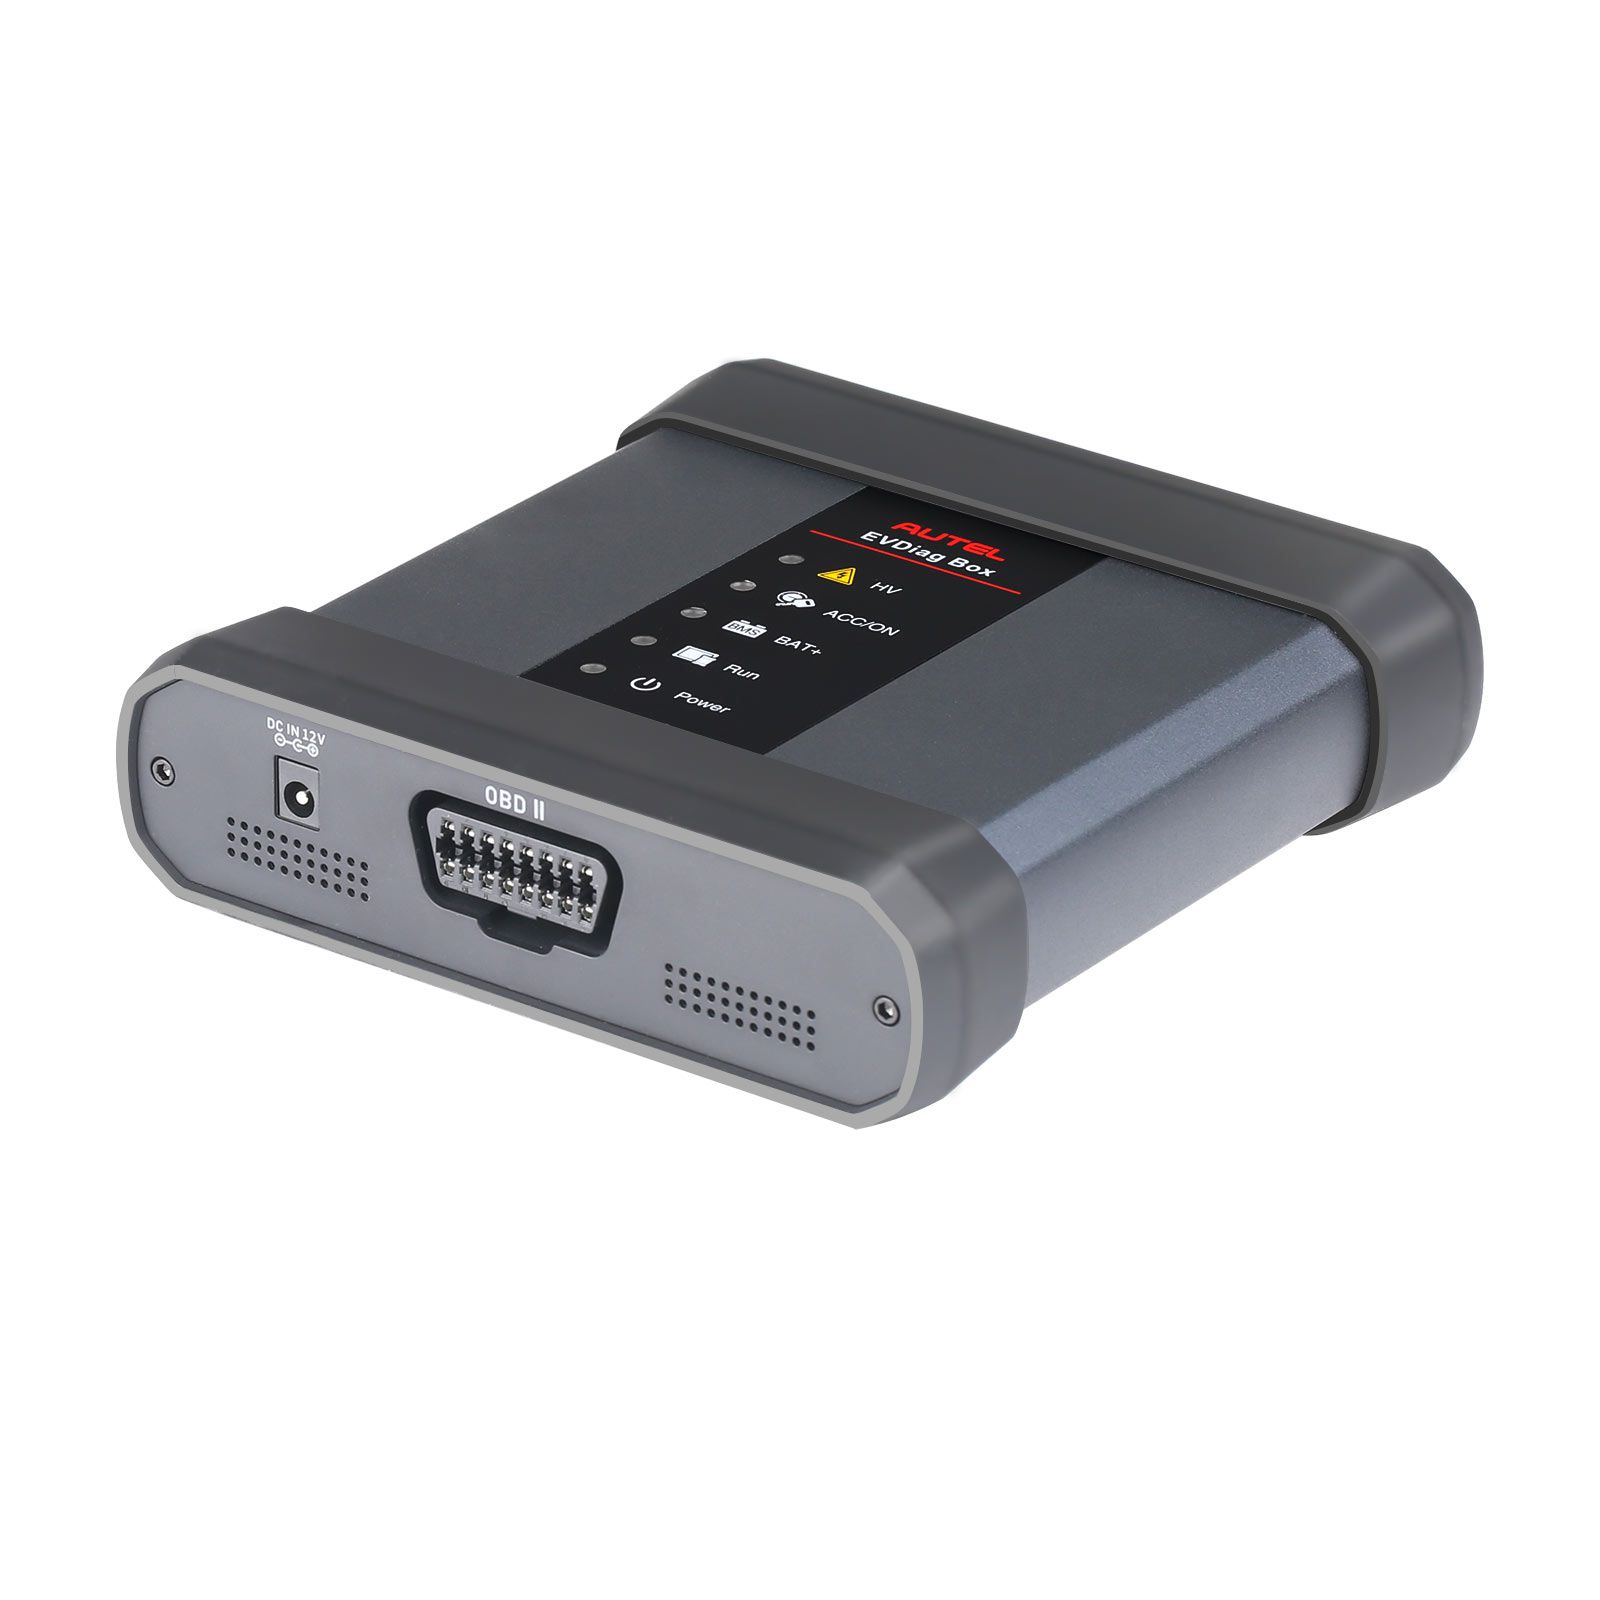 AUTEL EV Diagnostics Upgrade Kit EVDiag Box & Adapters for Battery Pack Diagnostics Compatible with ​​​​​​​Autel Ultra series